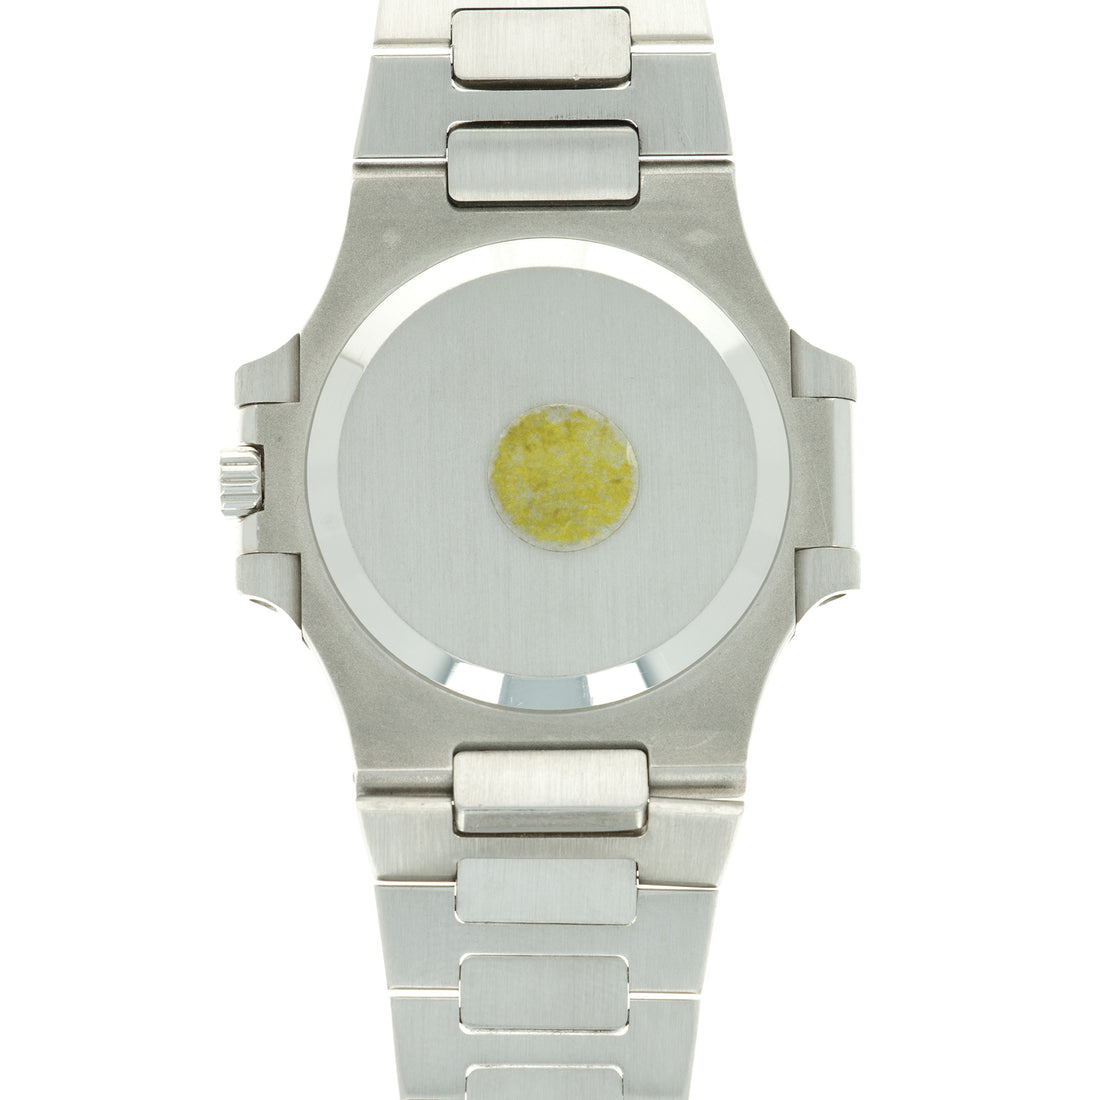 Patek Philippe Platinum Nautilus Watch Ref. 3800 with Original Warranty